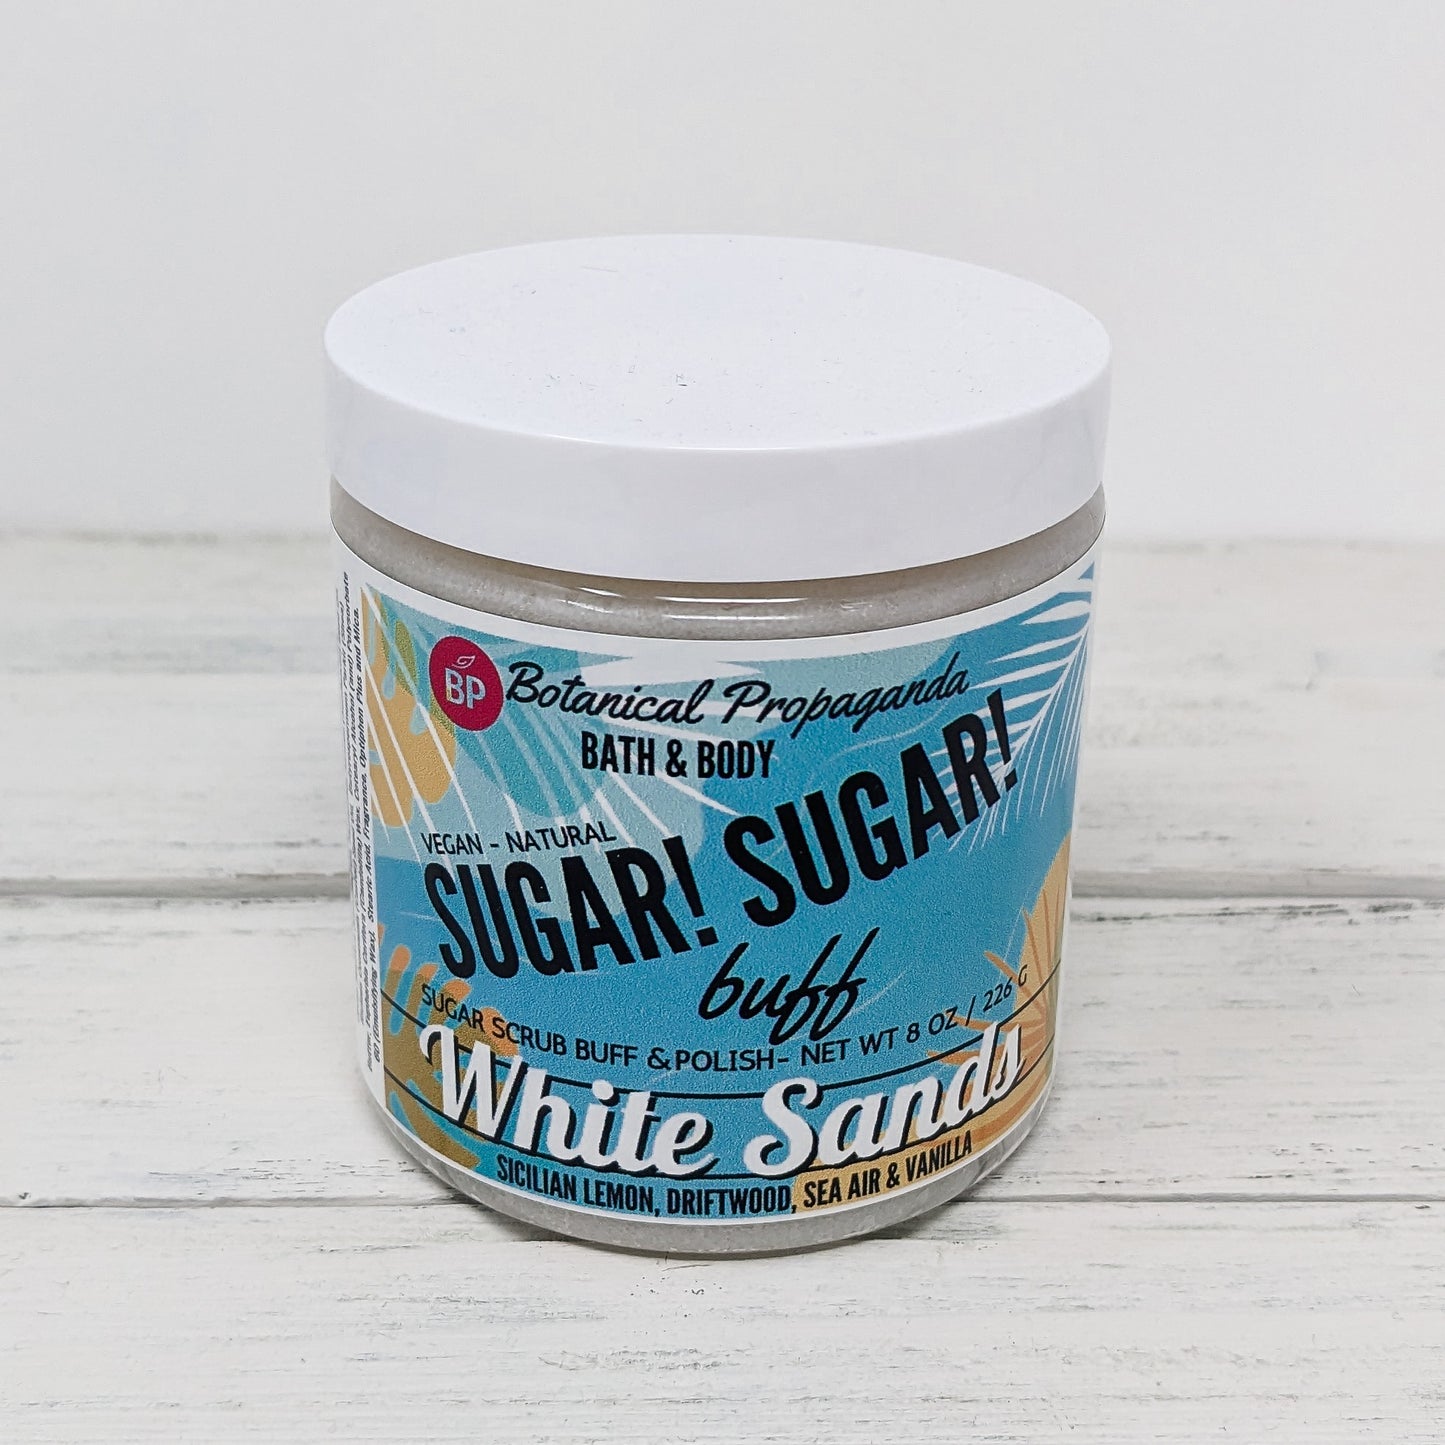 White Sands Sugar Buff